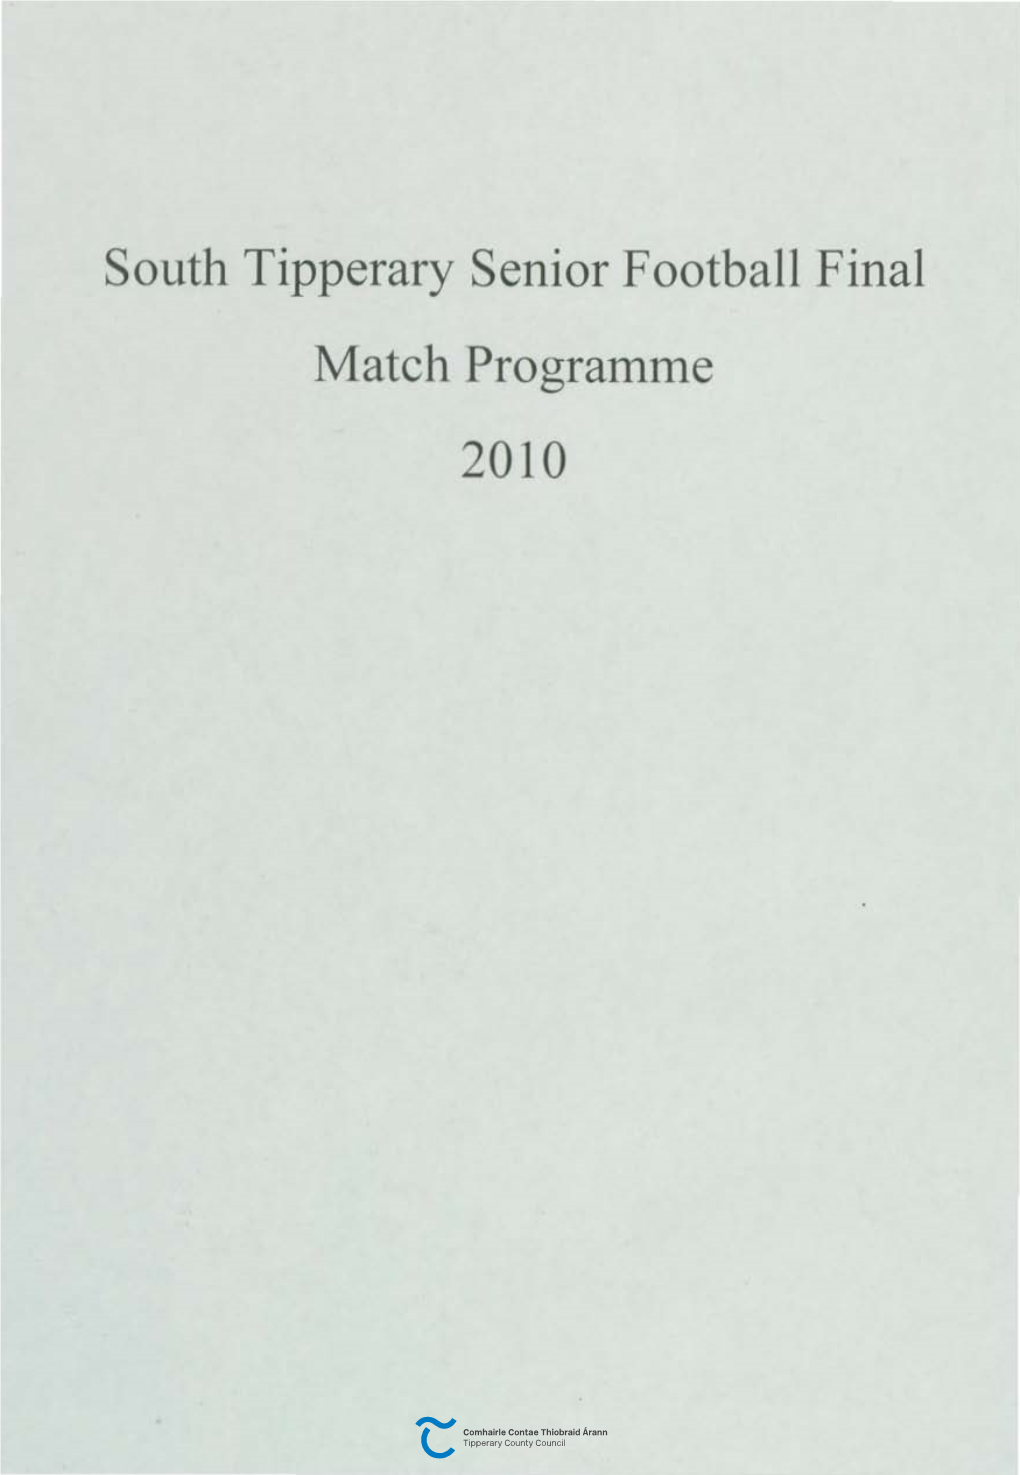 South Tipperary Senior Football Final Match Programme 2010 1 PATHS to FINAL 2010